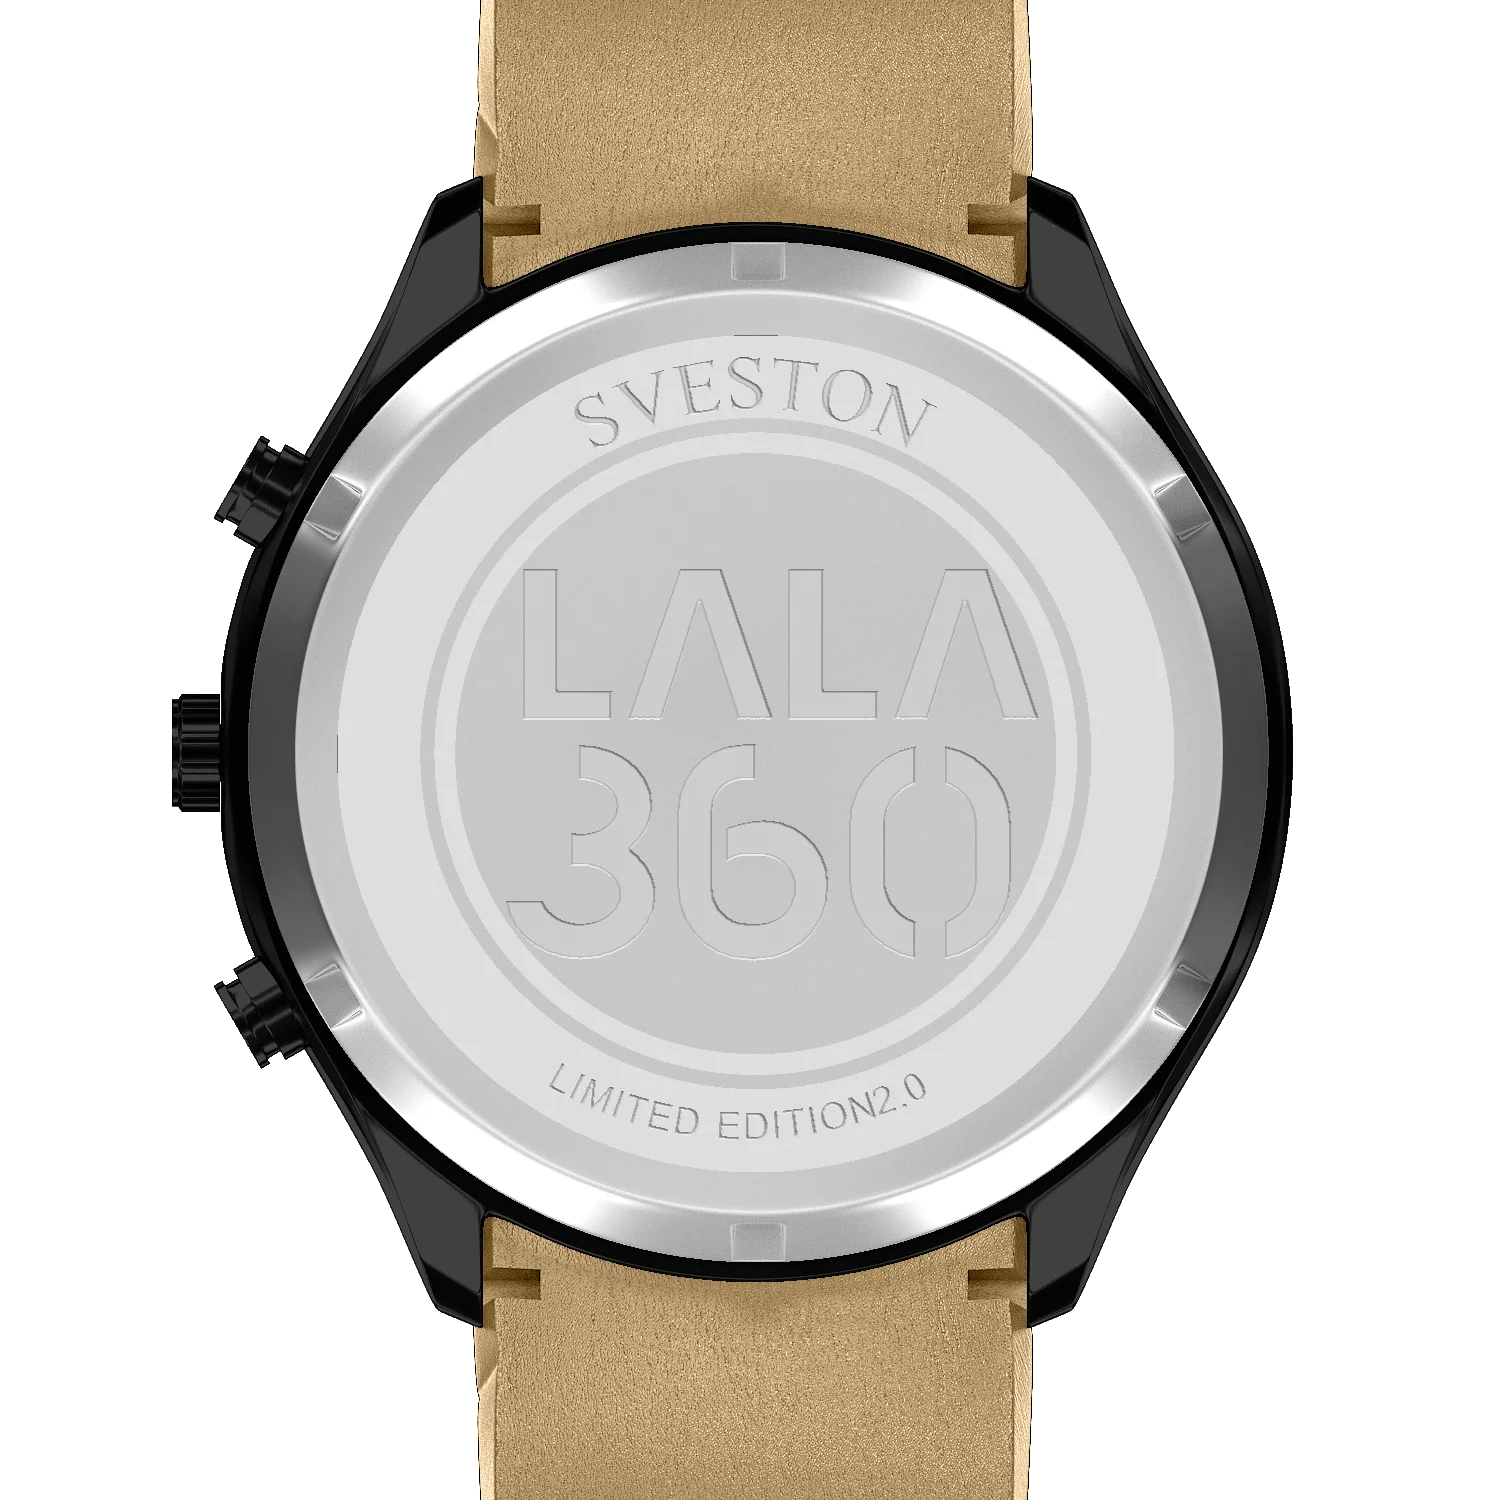 Sveston Lala 360 (Leather)